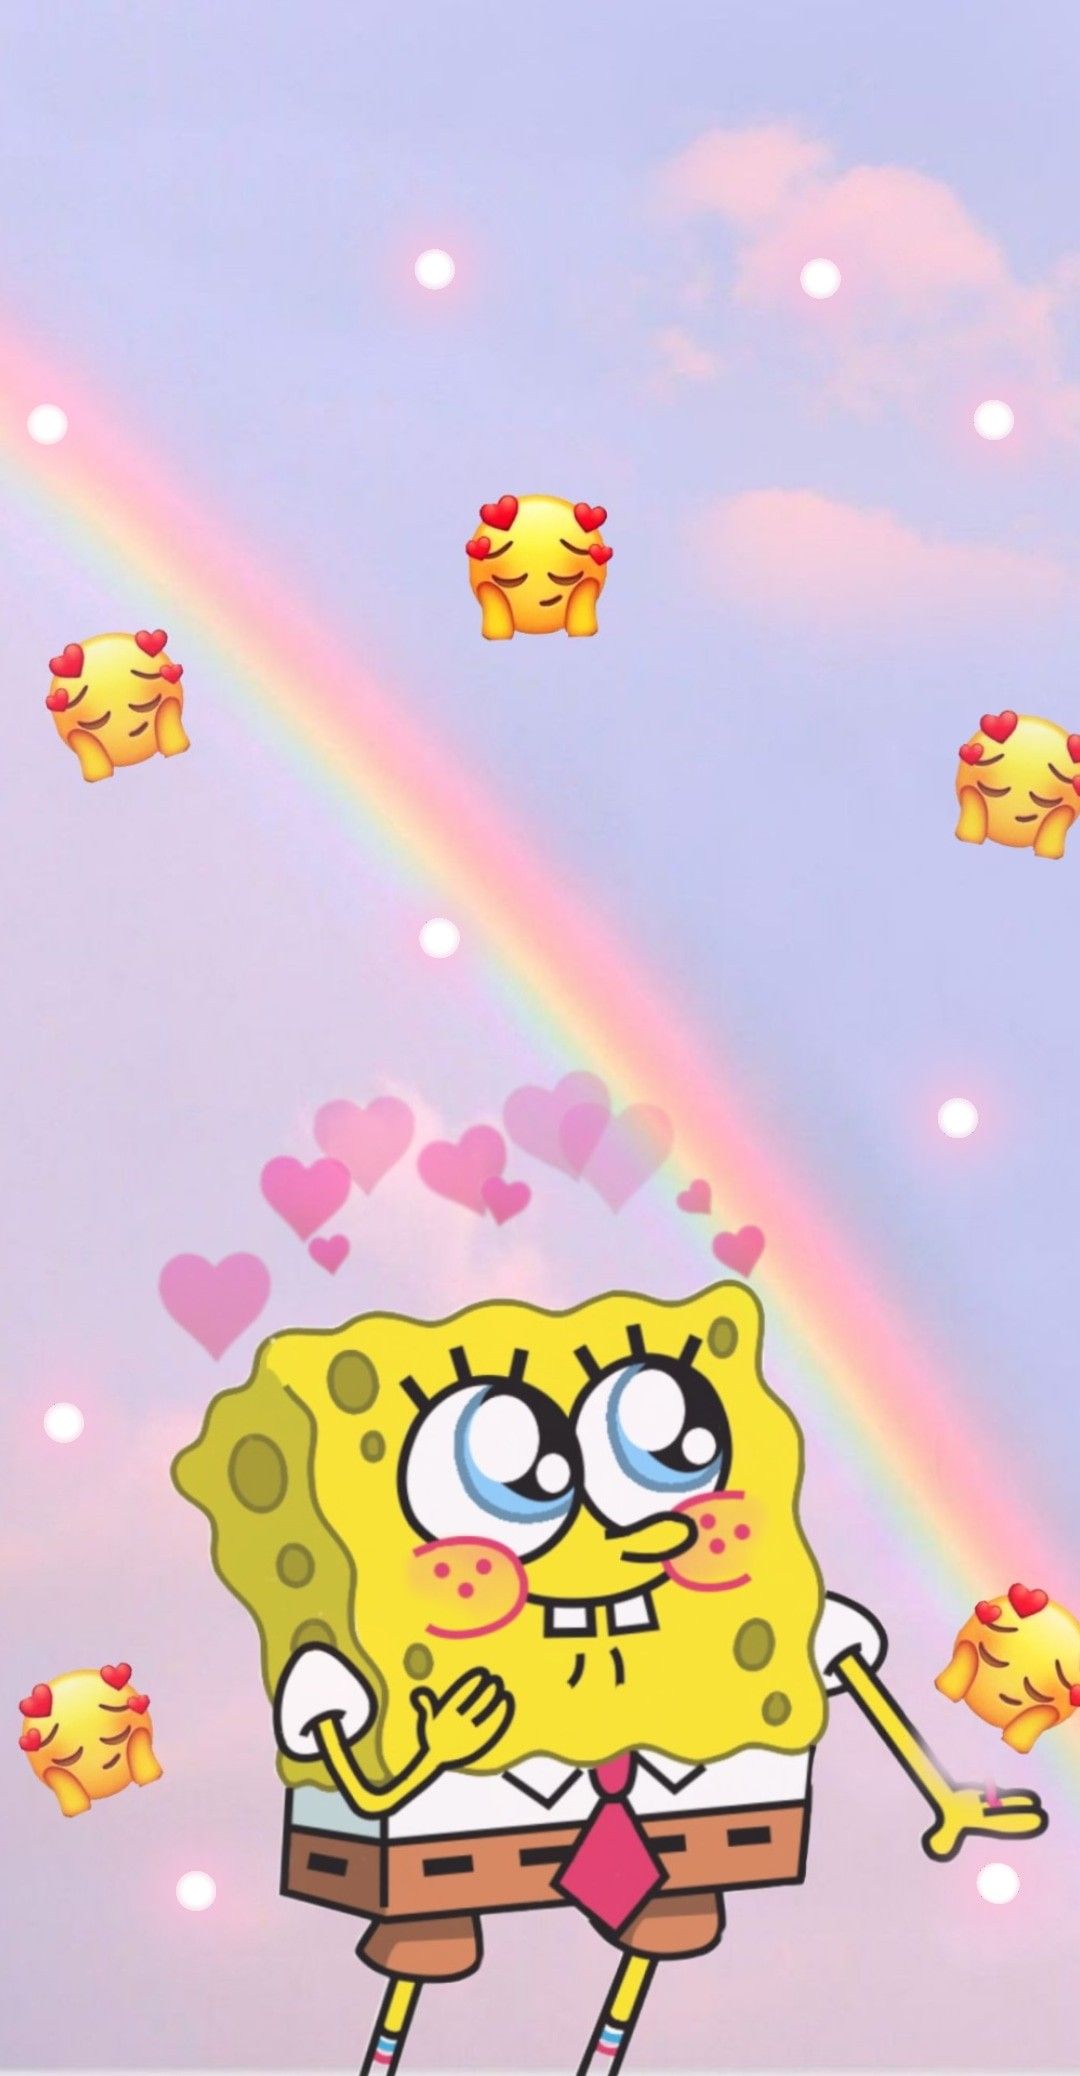 wholesome spongebob  Cartoon wallpaper iphone, Cute cartoon wallpapers, Spongebob  wallpaper